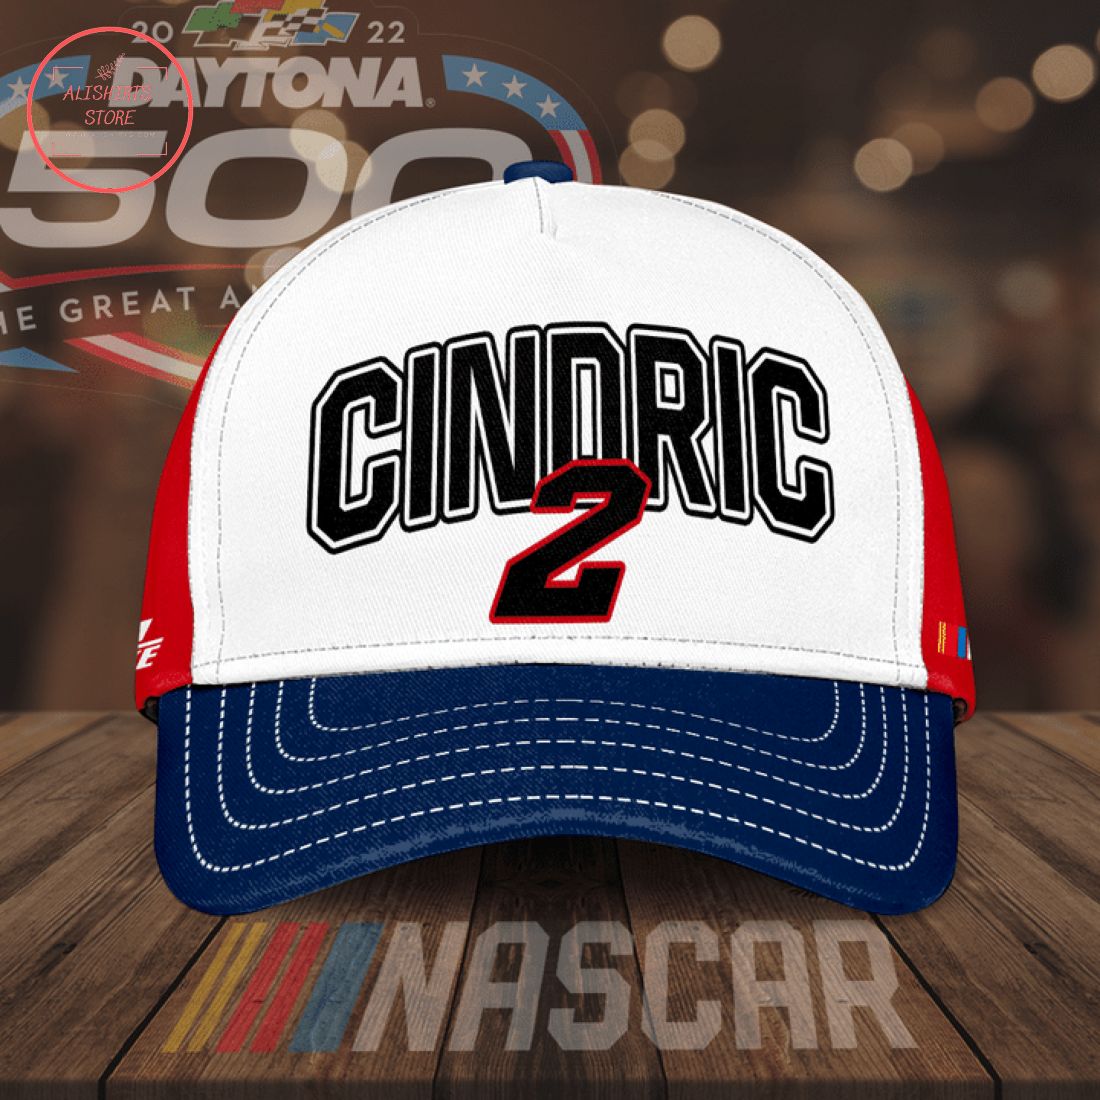 Cindric Daytona 500 Classic Hat Cap